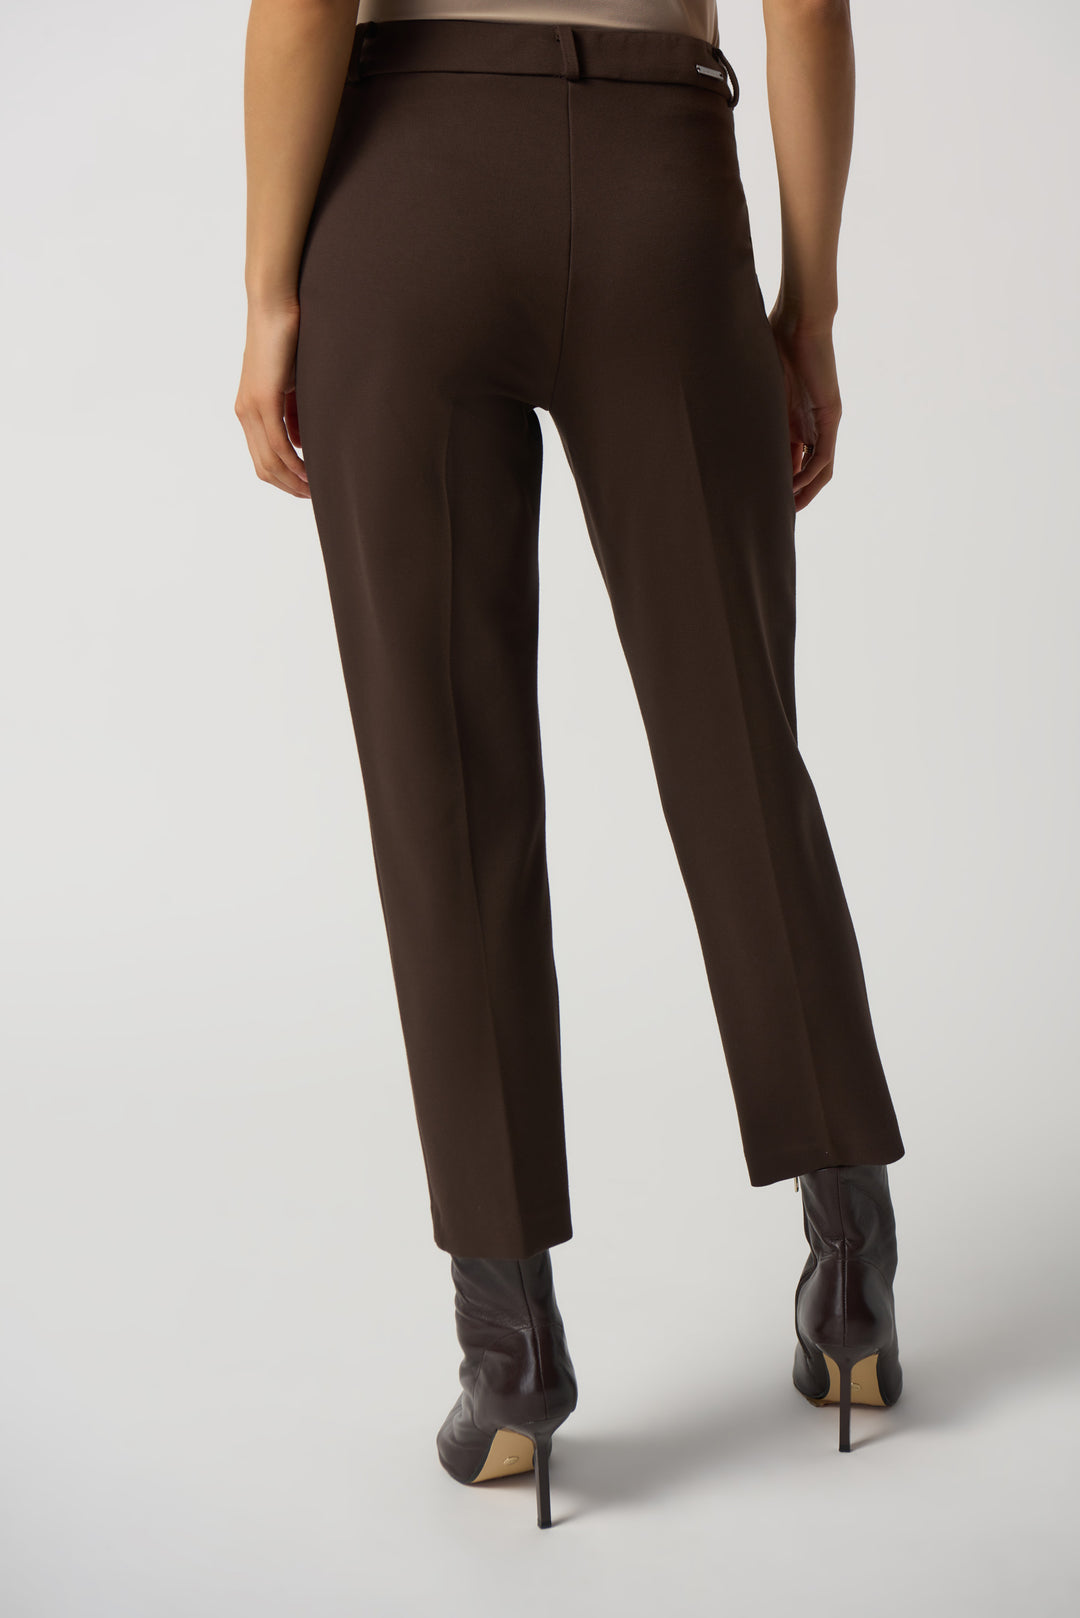 Joseph Ribkoff Fall 2023 women's business casual heavy knit cropped dress pants with pockets - mocha back